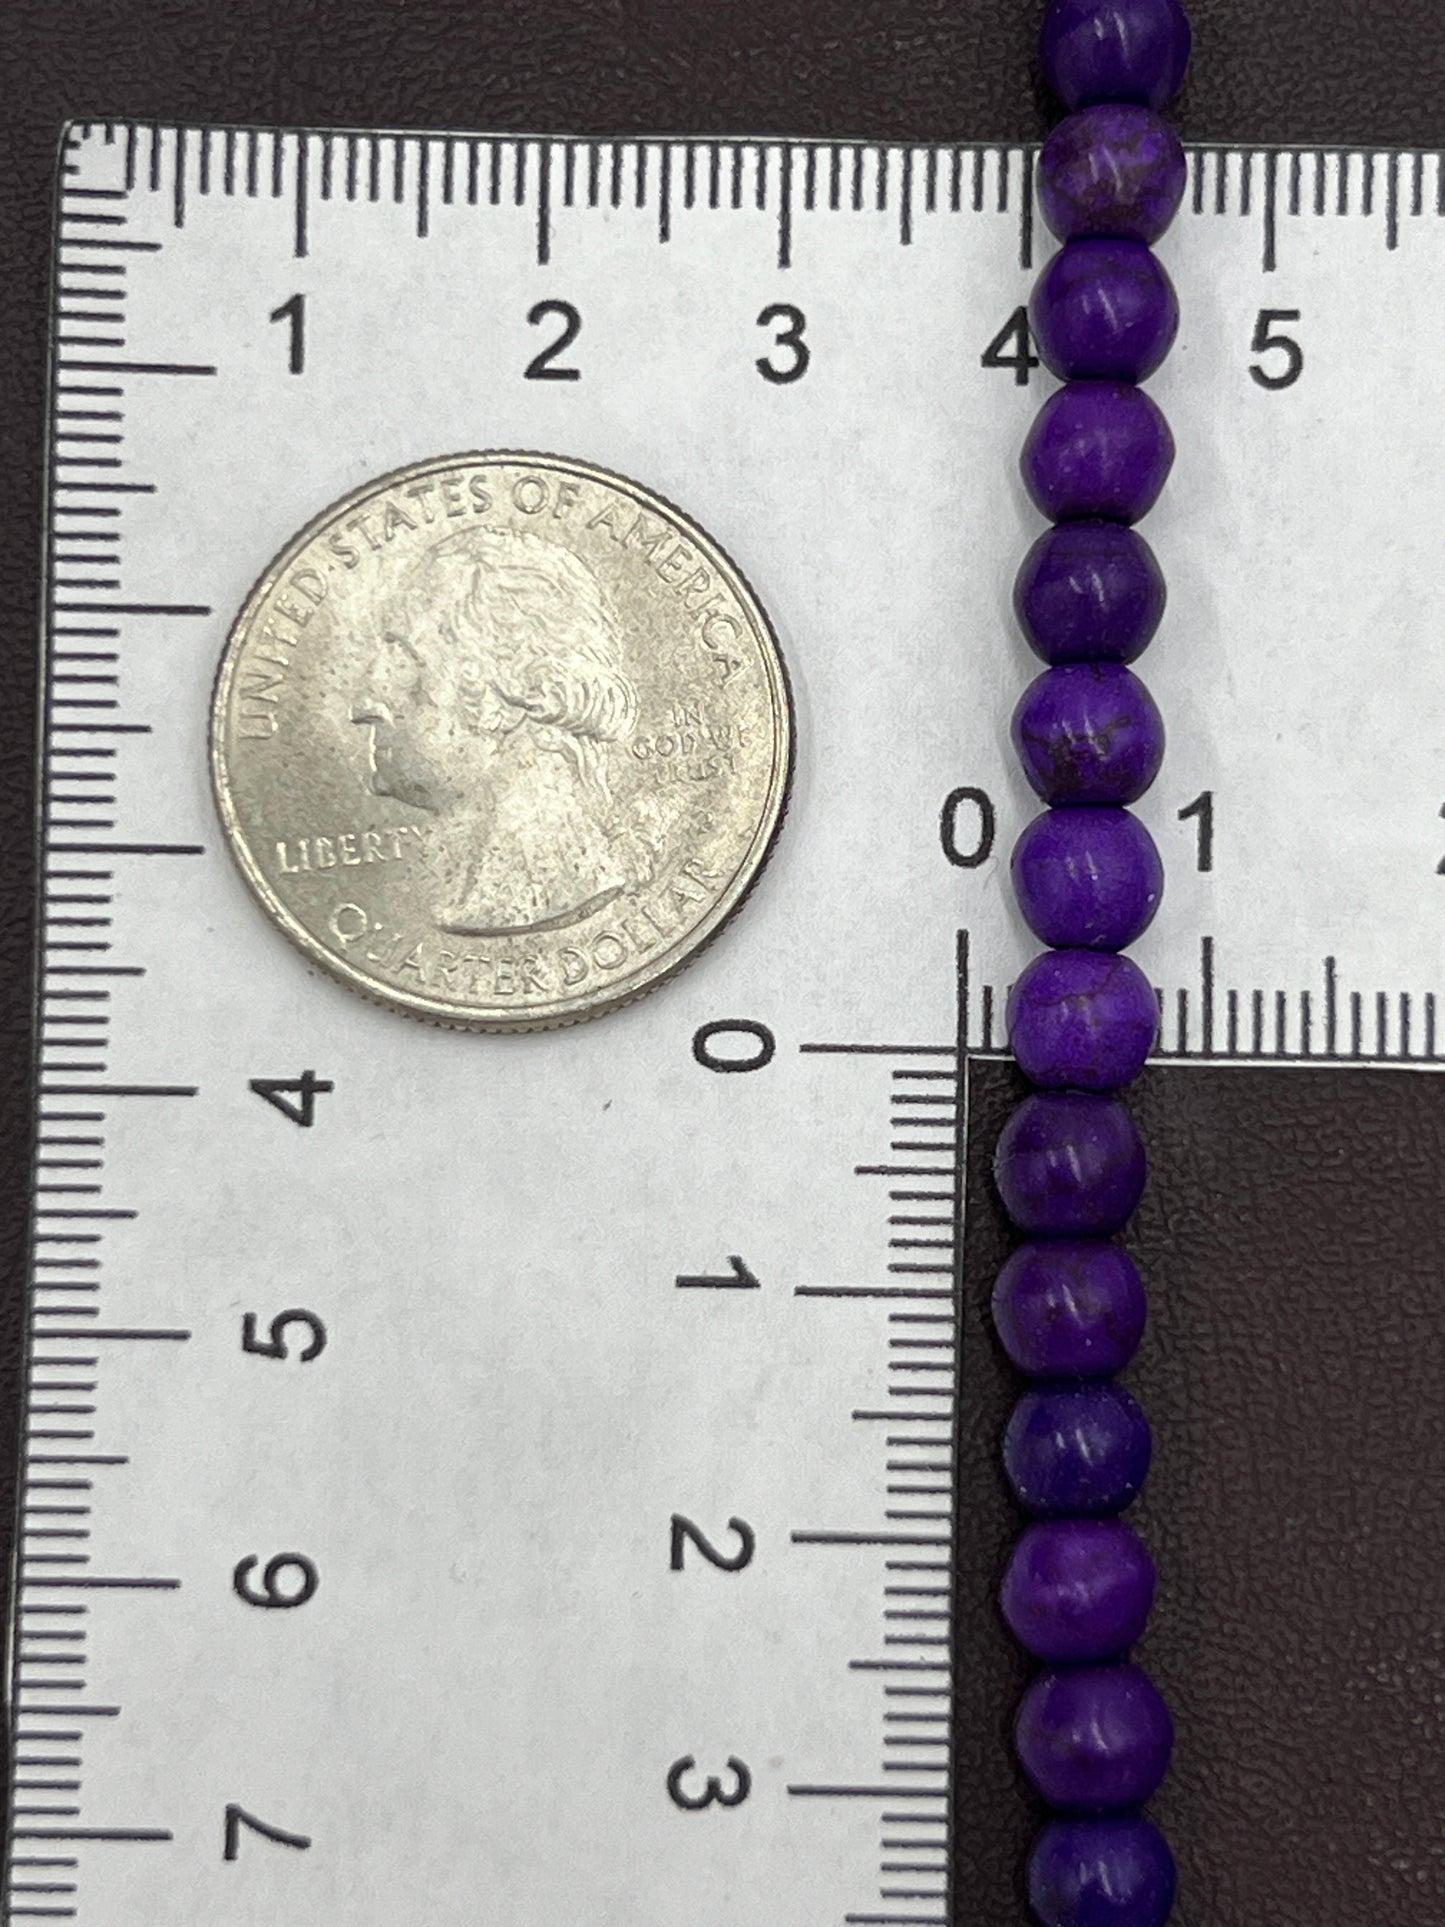 6mm Purple Dyed Magnesite 1 Strand (40cm)